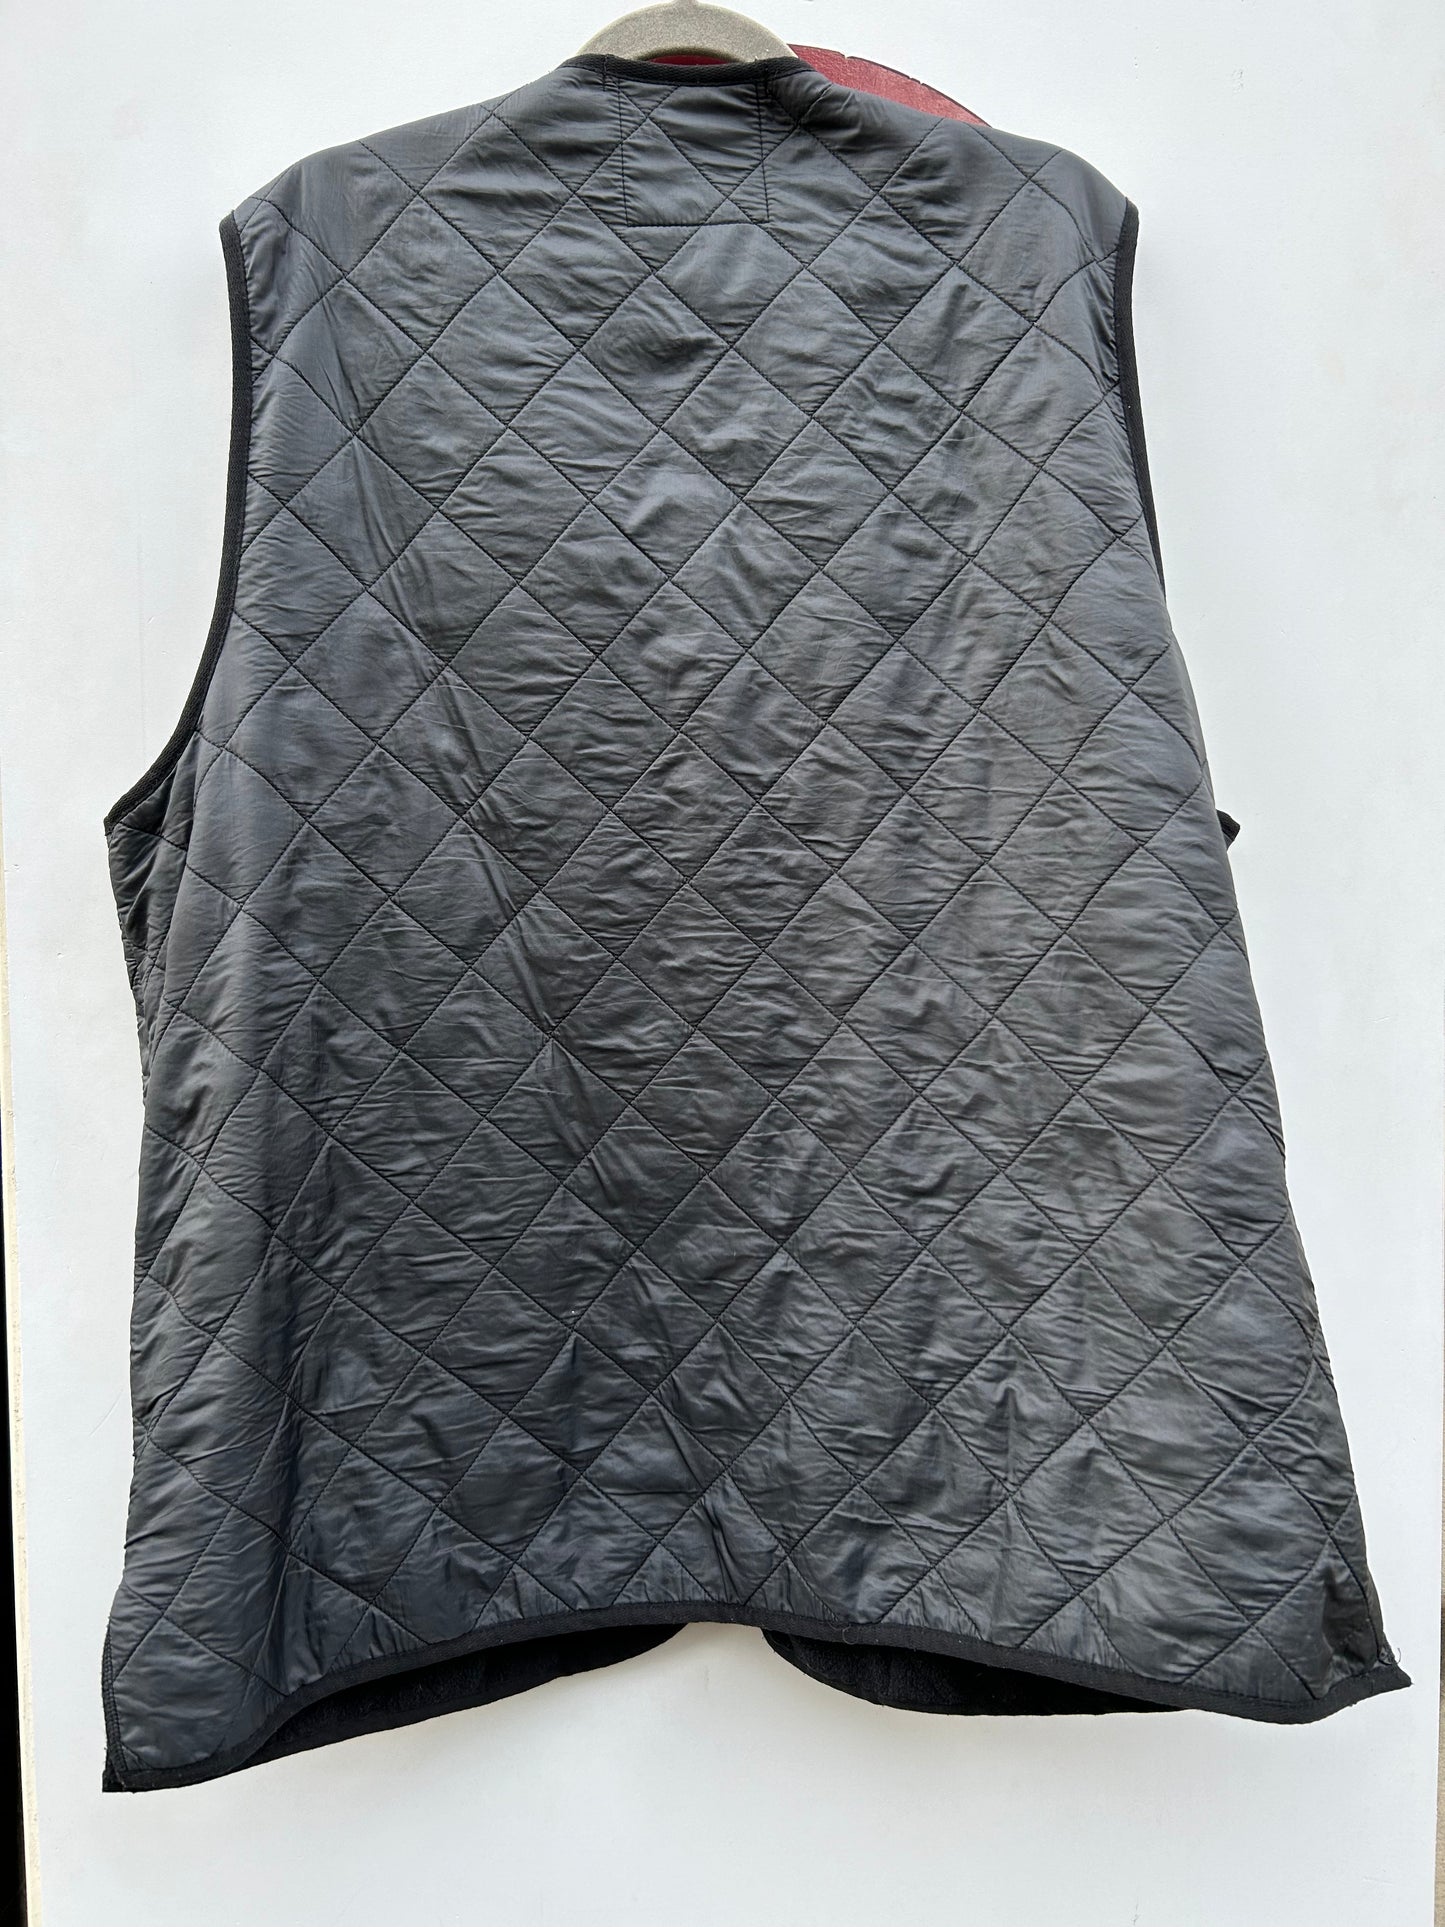 Gilet Barbour Polarquilt con pile nero XL black Polarquilt Waistcoat zip in liner XL